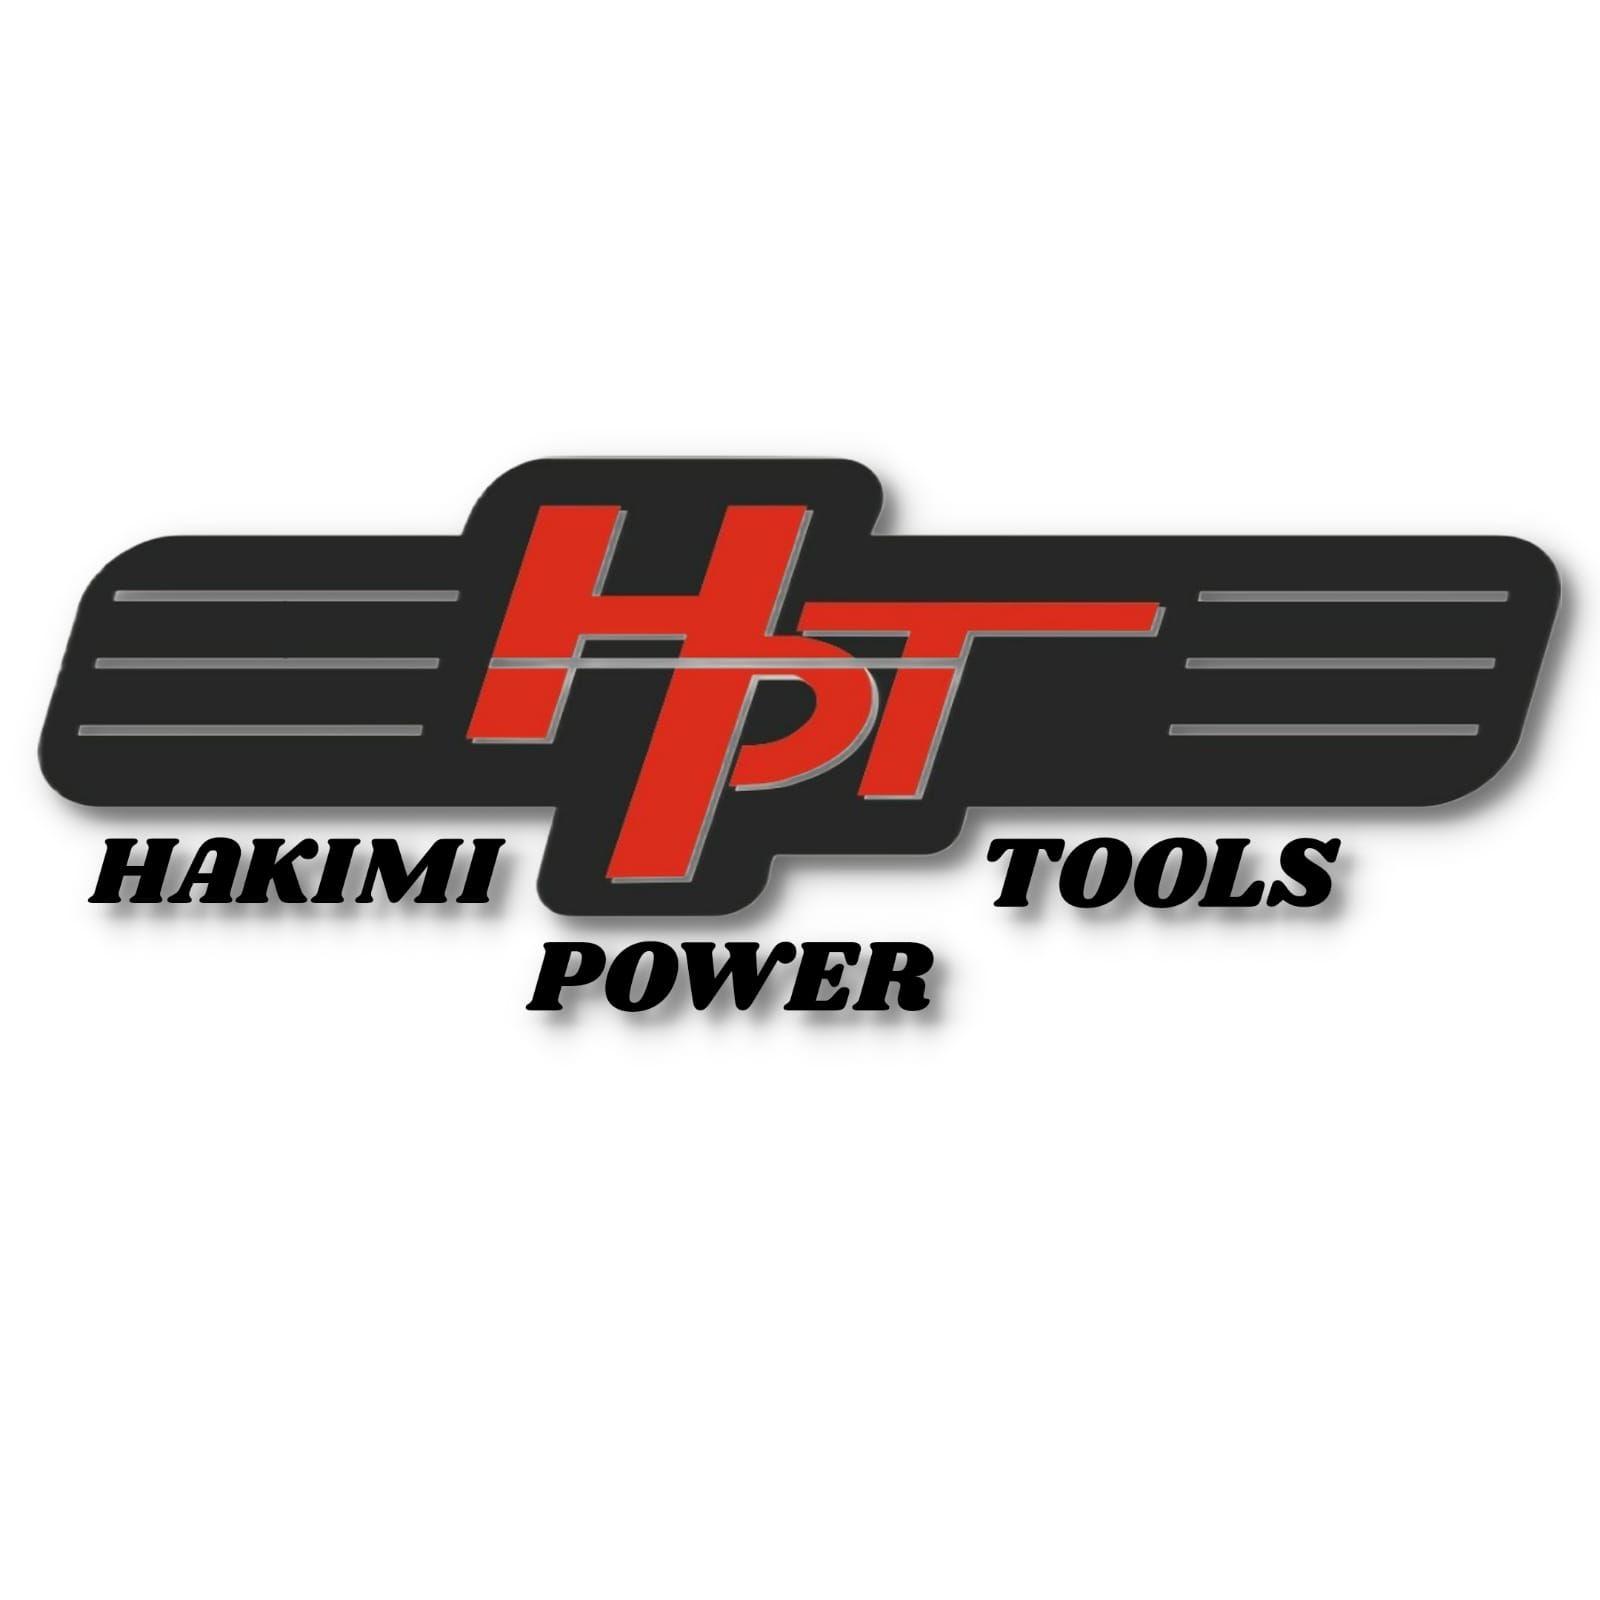 Hakimi Power Tools